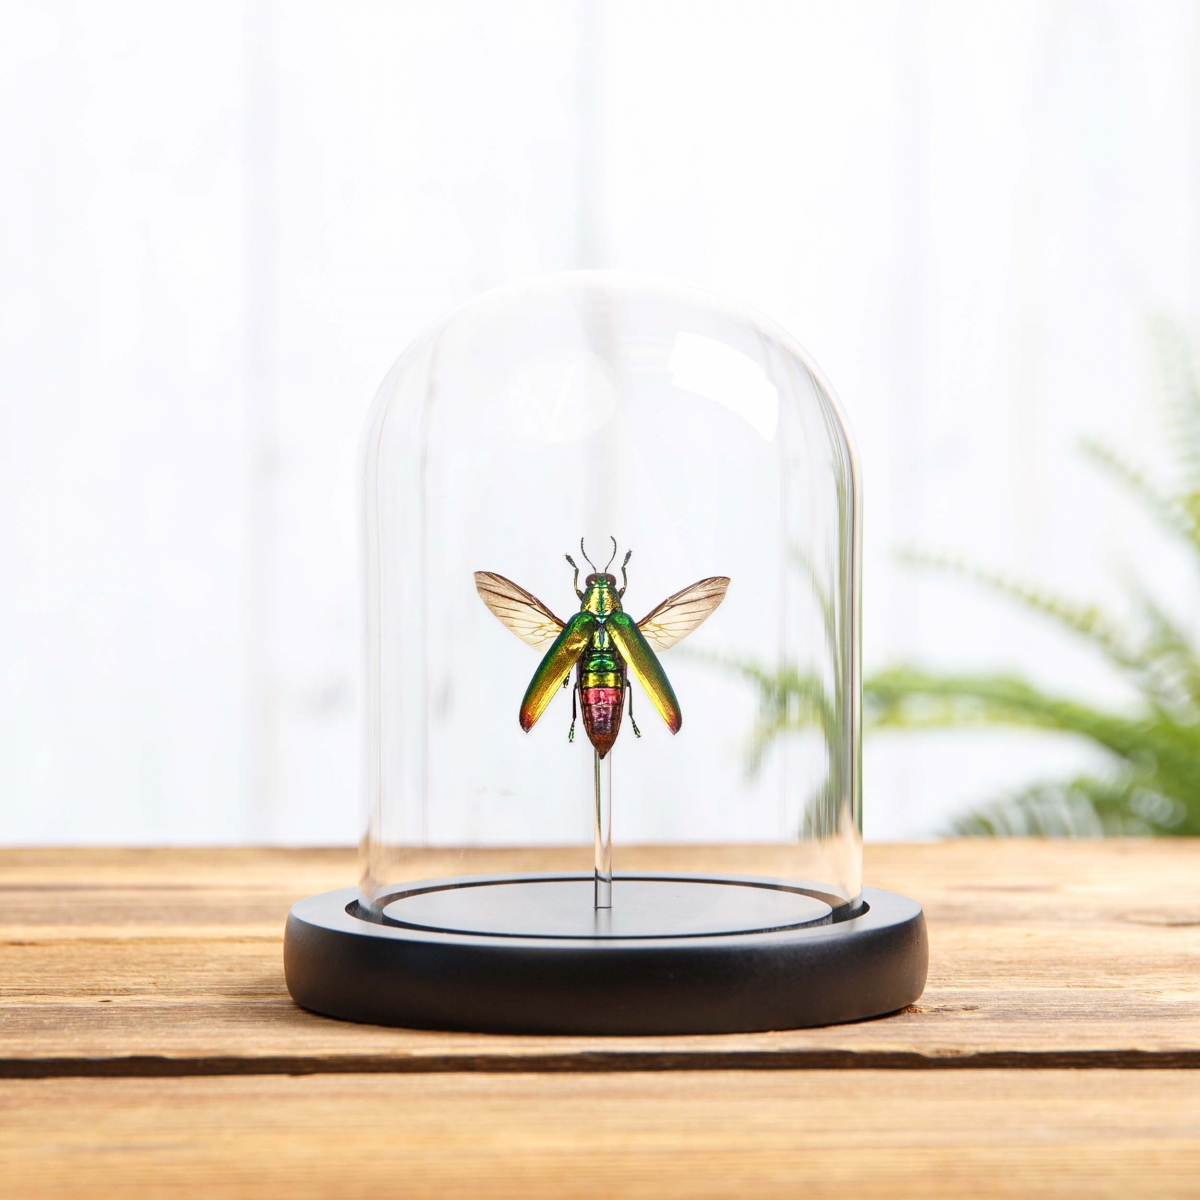 Minibeast Jember Jewel Beetle in Glass Dome with Wooden Base (Chrysochroa fulminans jember)